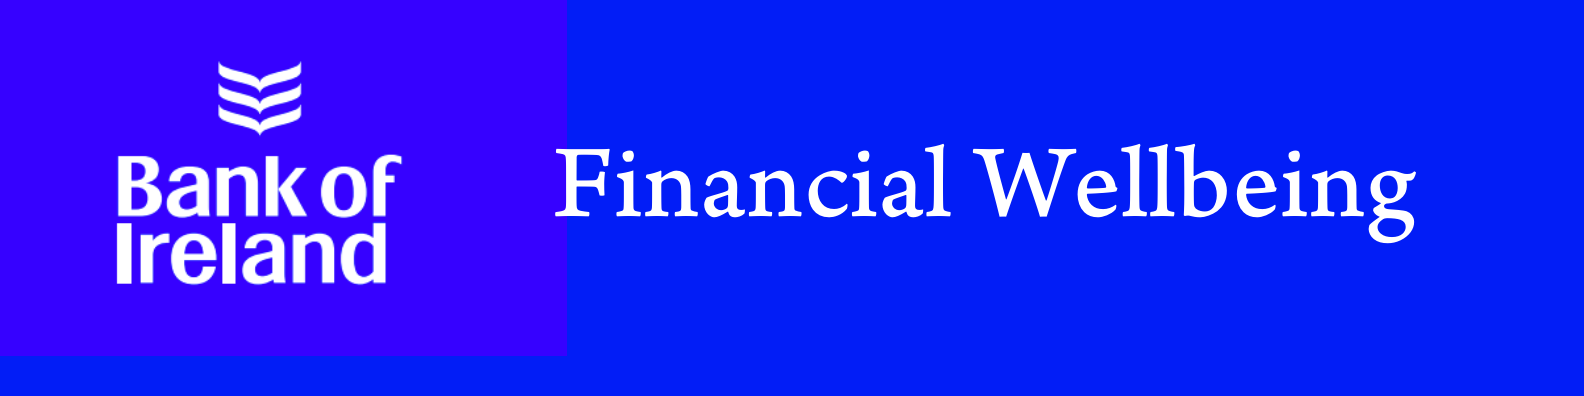 BOI Financial Wellbeing Banner